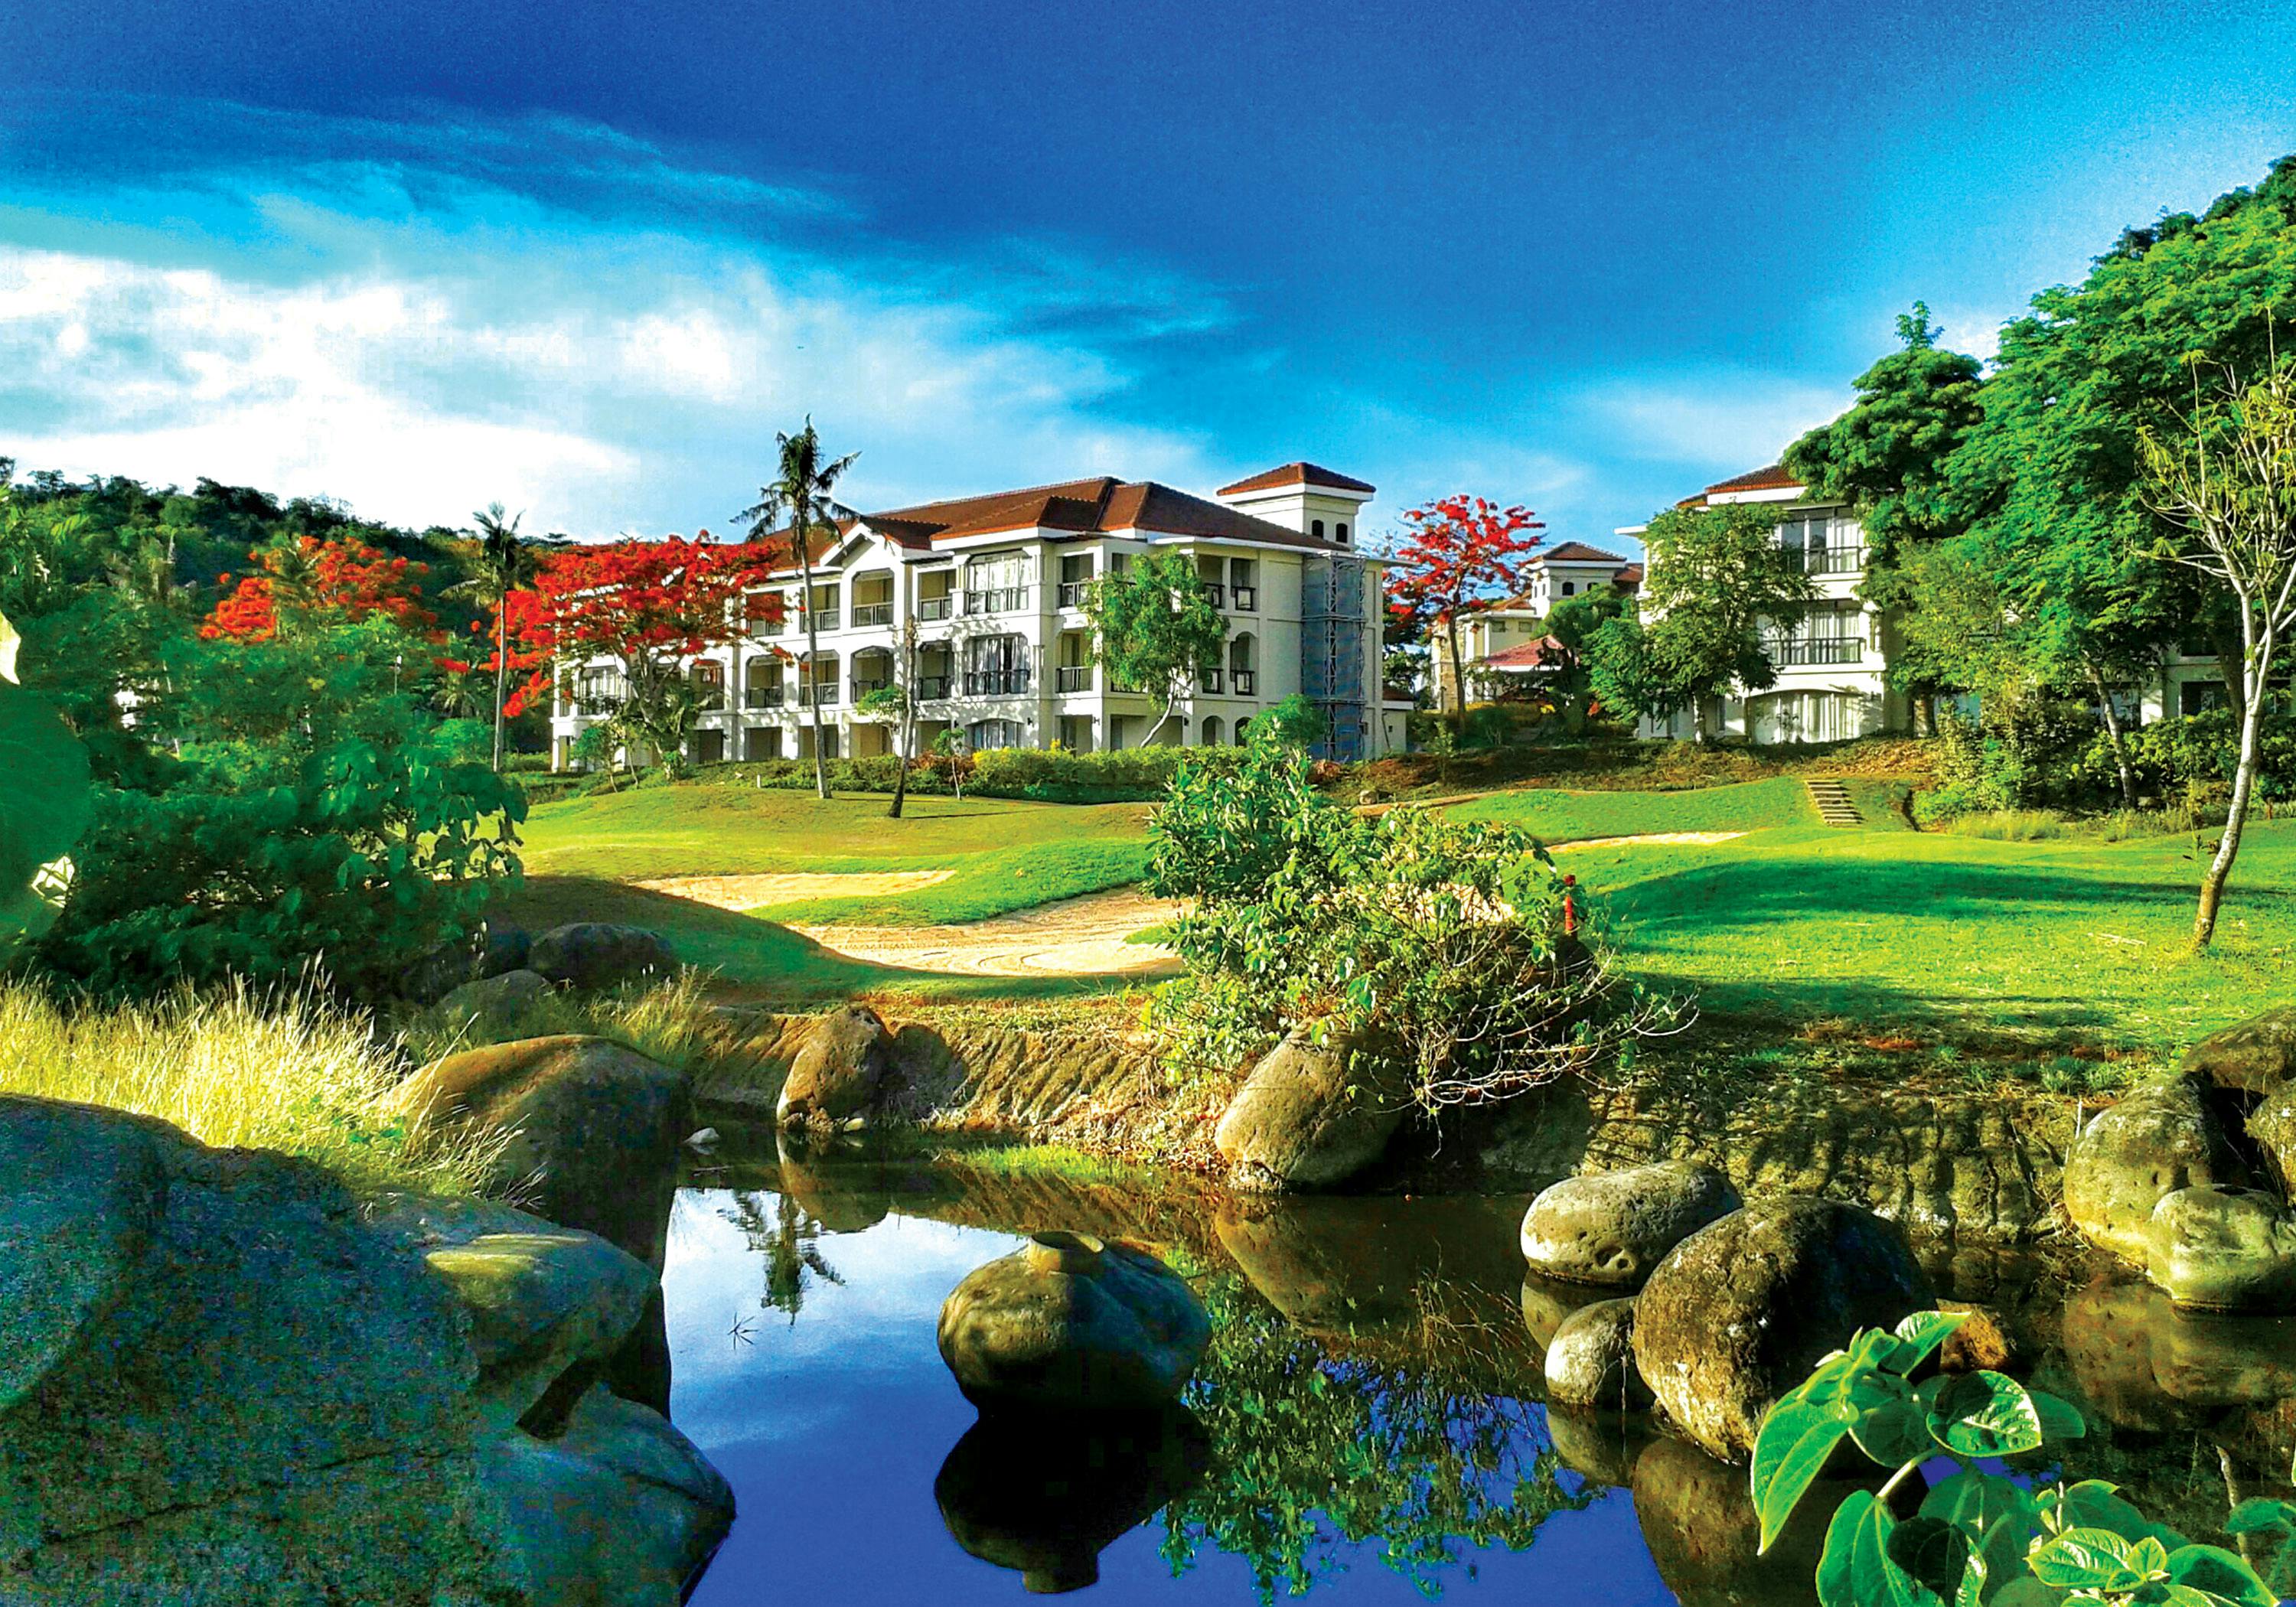 Fairways & Bluewater Resort lush green surroundings and well-built hotel infrastructure